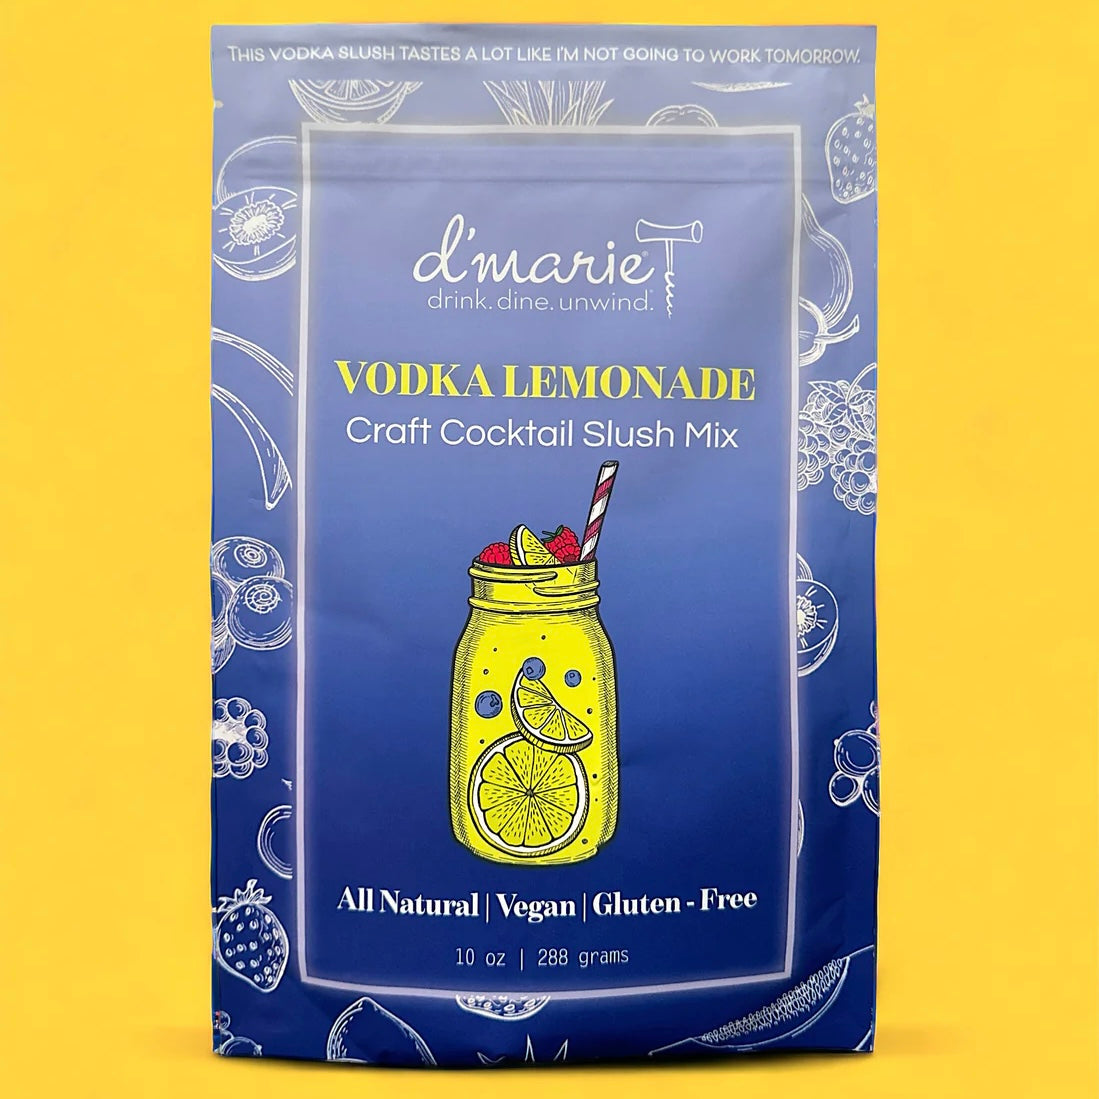 Craft Cocktail Slush Mix - Vodka Lemonade